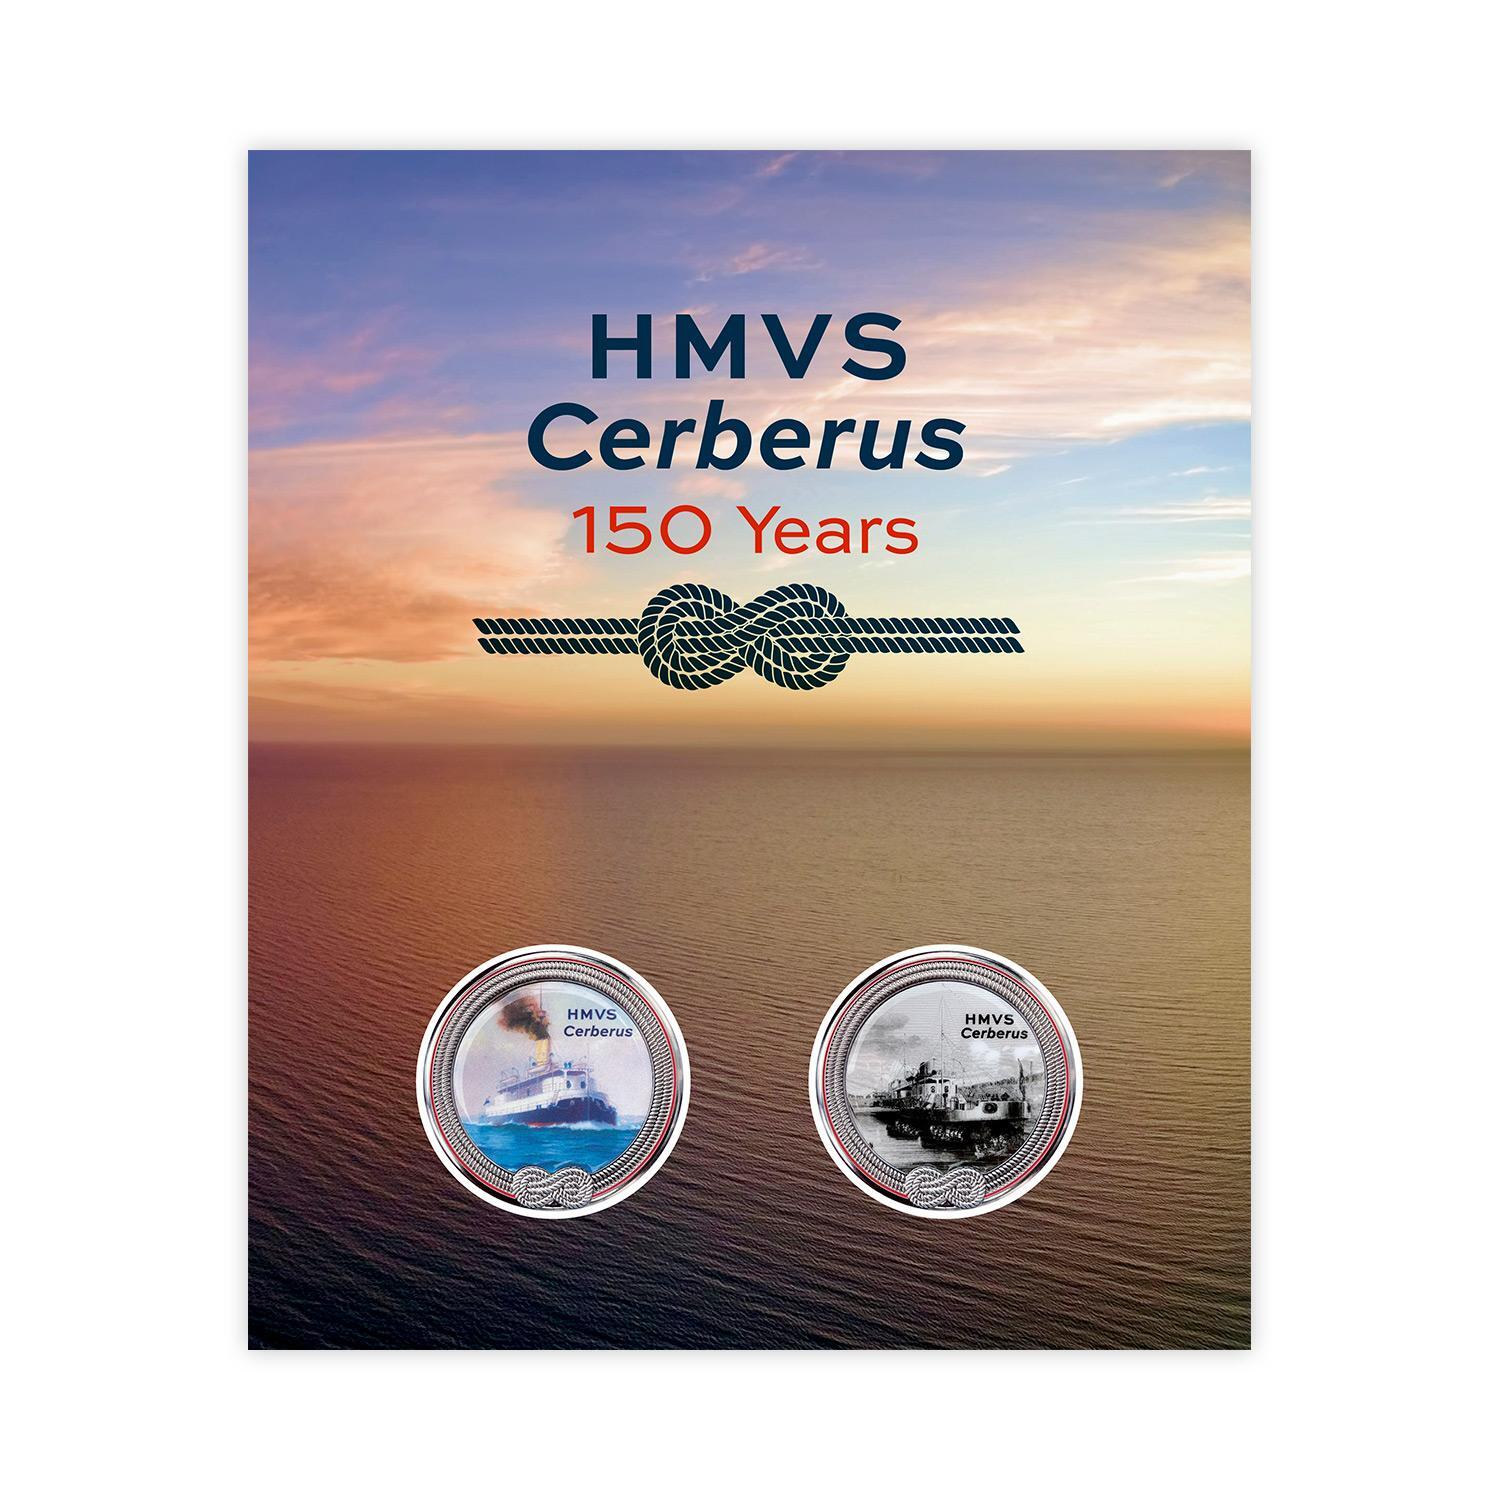 HMVS Cerberus 150 Years Collection Impressions PMC Folder